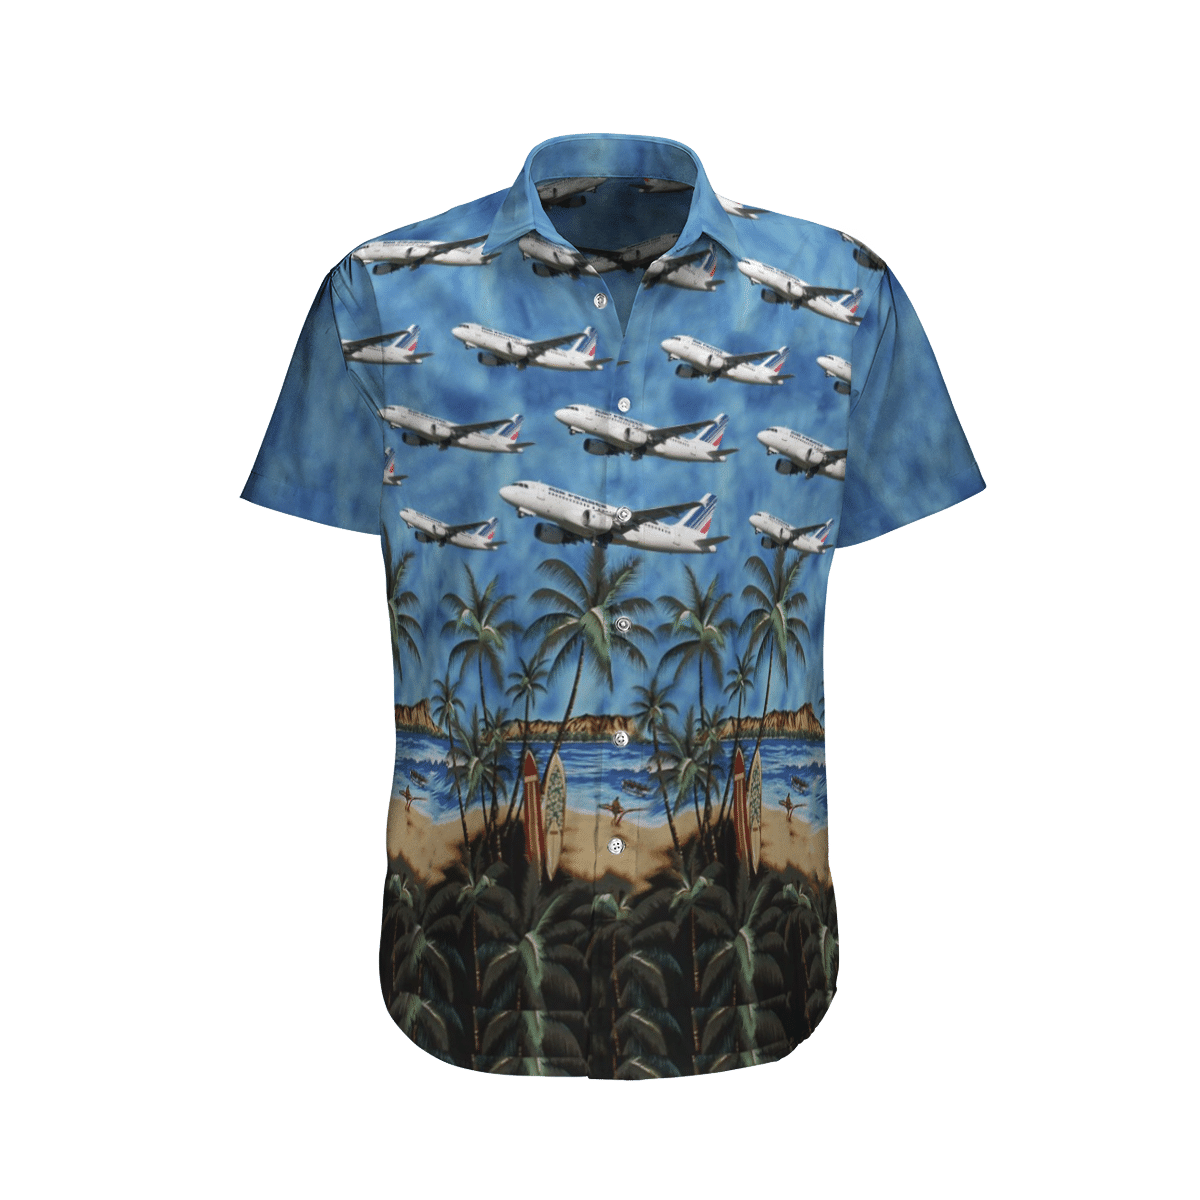 Enjoy your summer with top cool hawaiian shirt below 186